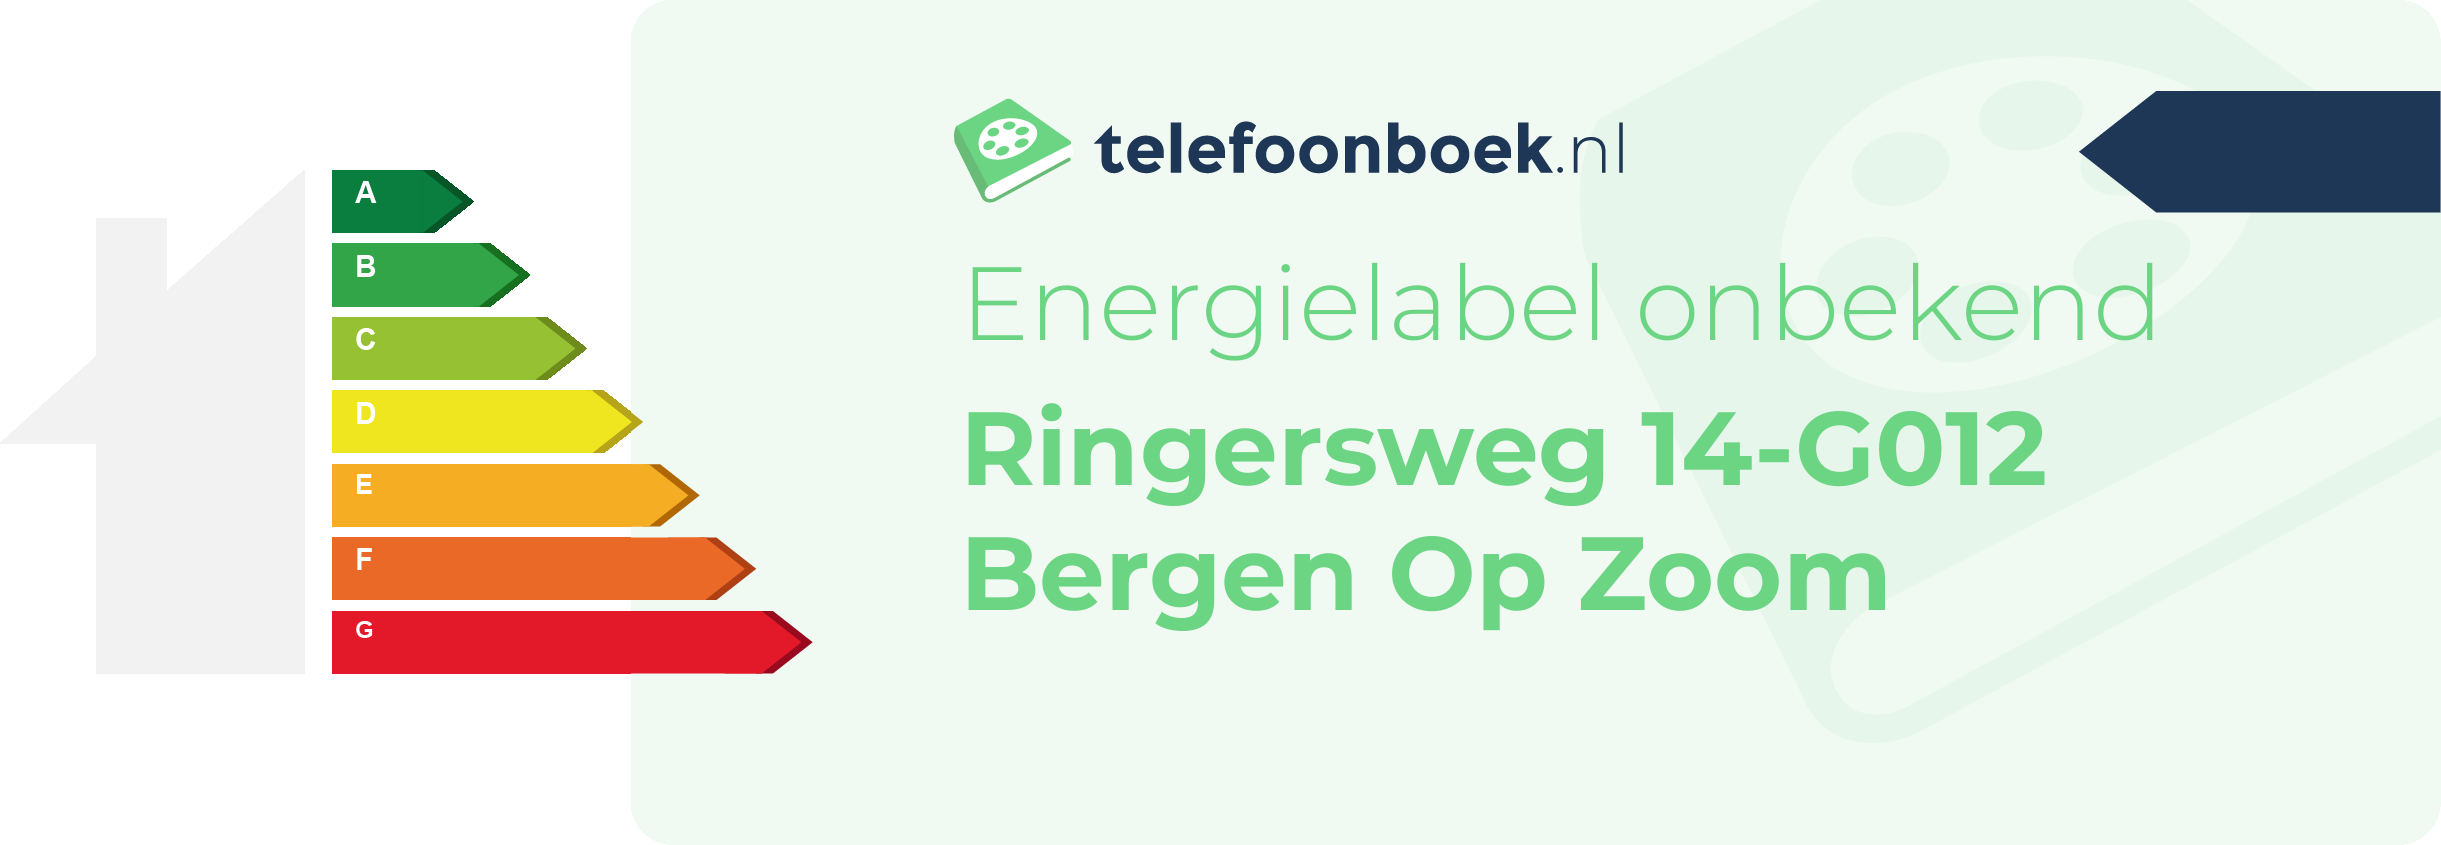 Energielabel Ringersweg 14-G012 Bergen Op Zoom